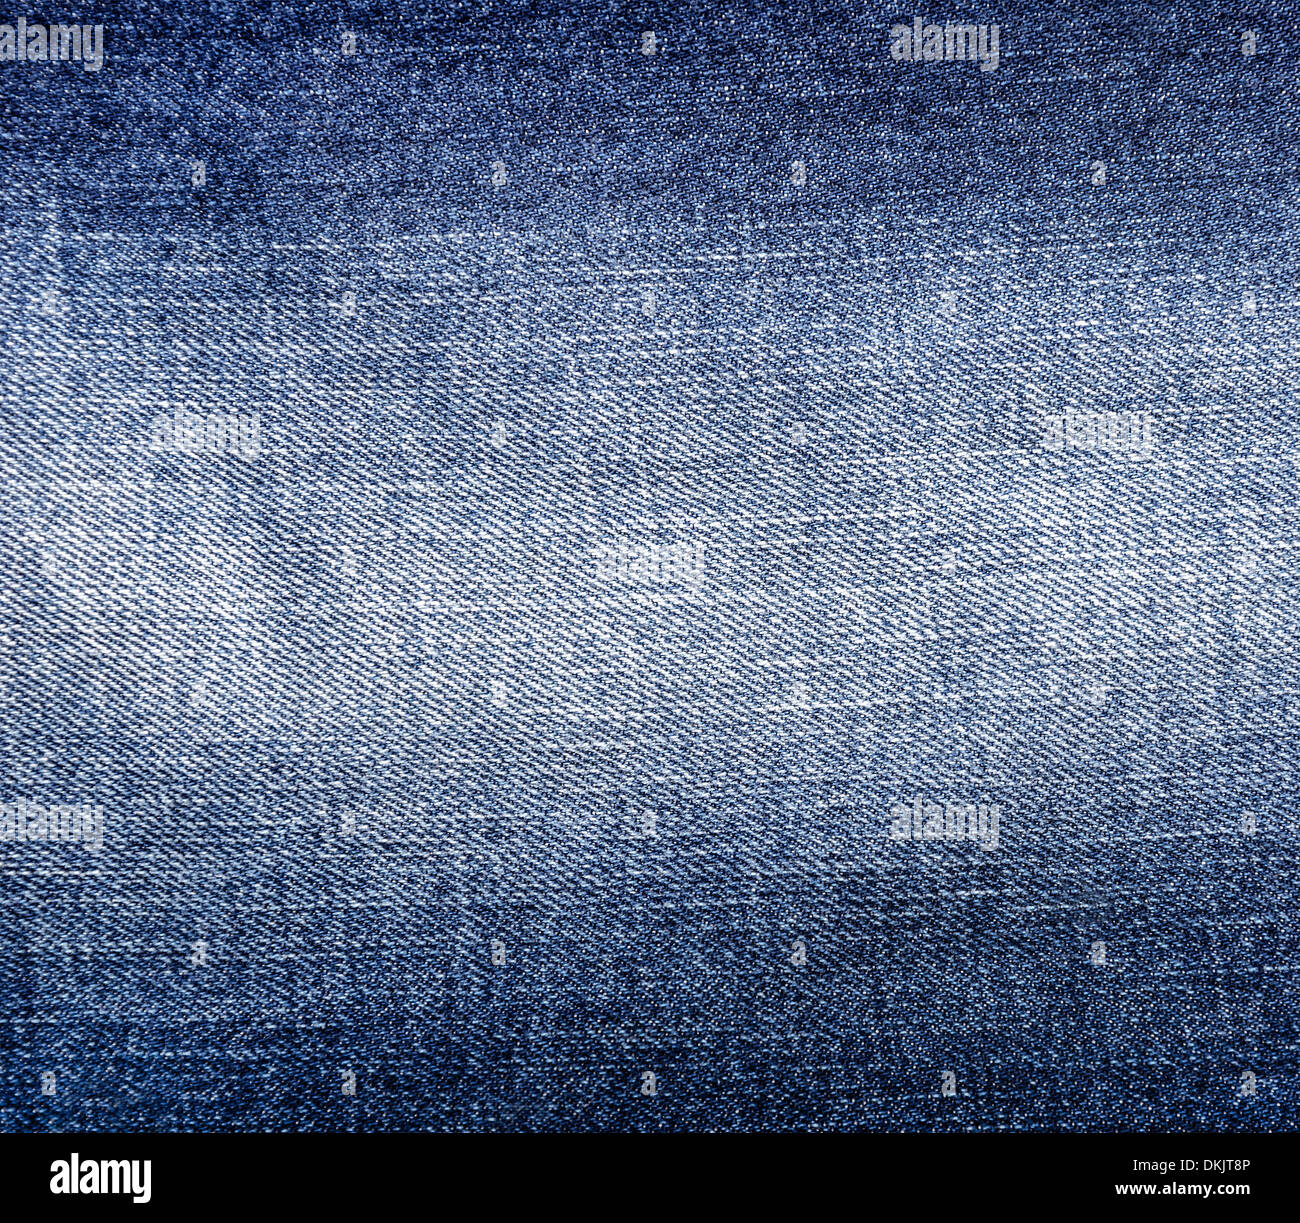 Worn blue denim jeans texture, background Stock Photo - Alamy